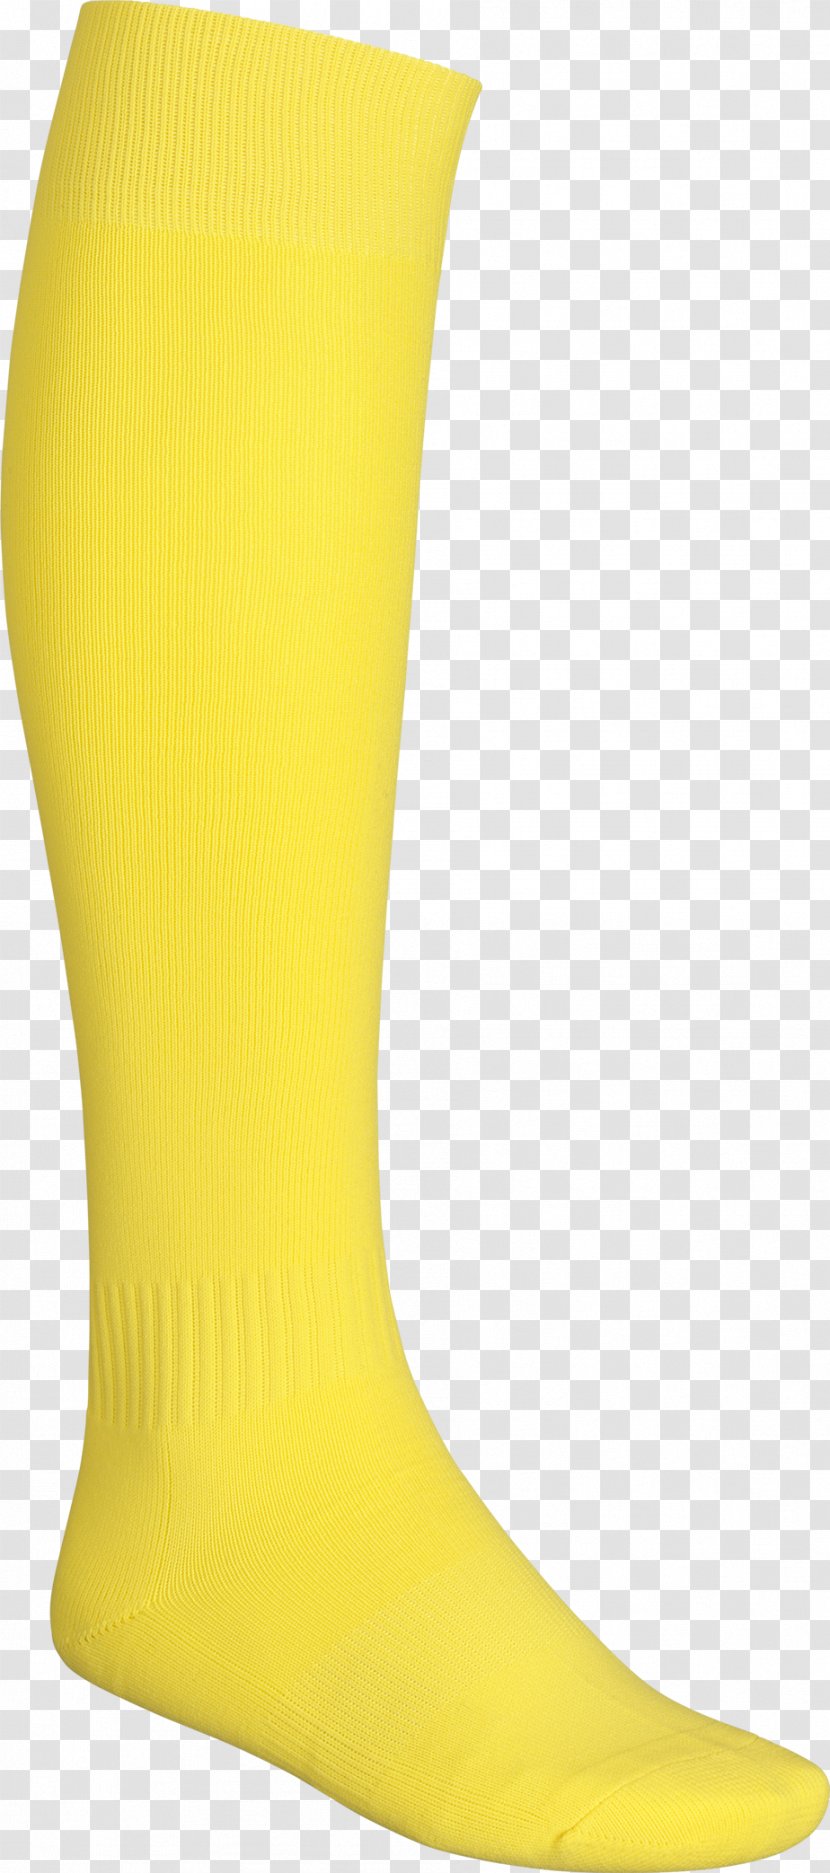 Sports Shoes Yellow Sock - Pelipaita Transparent PNG